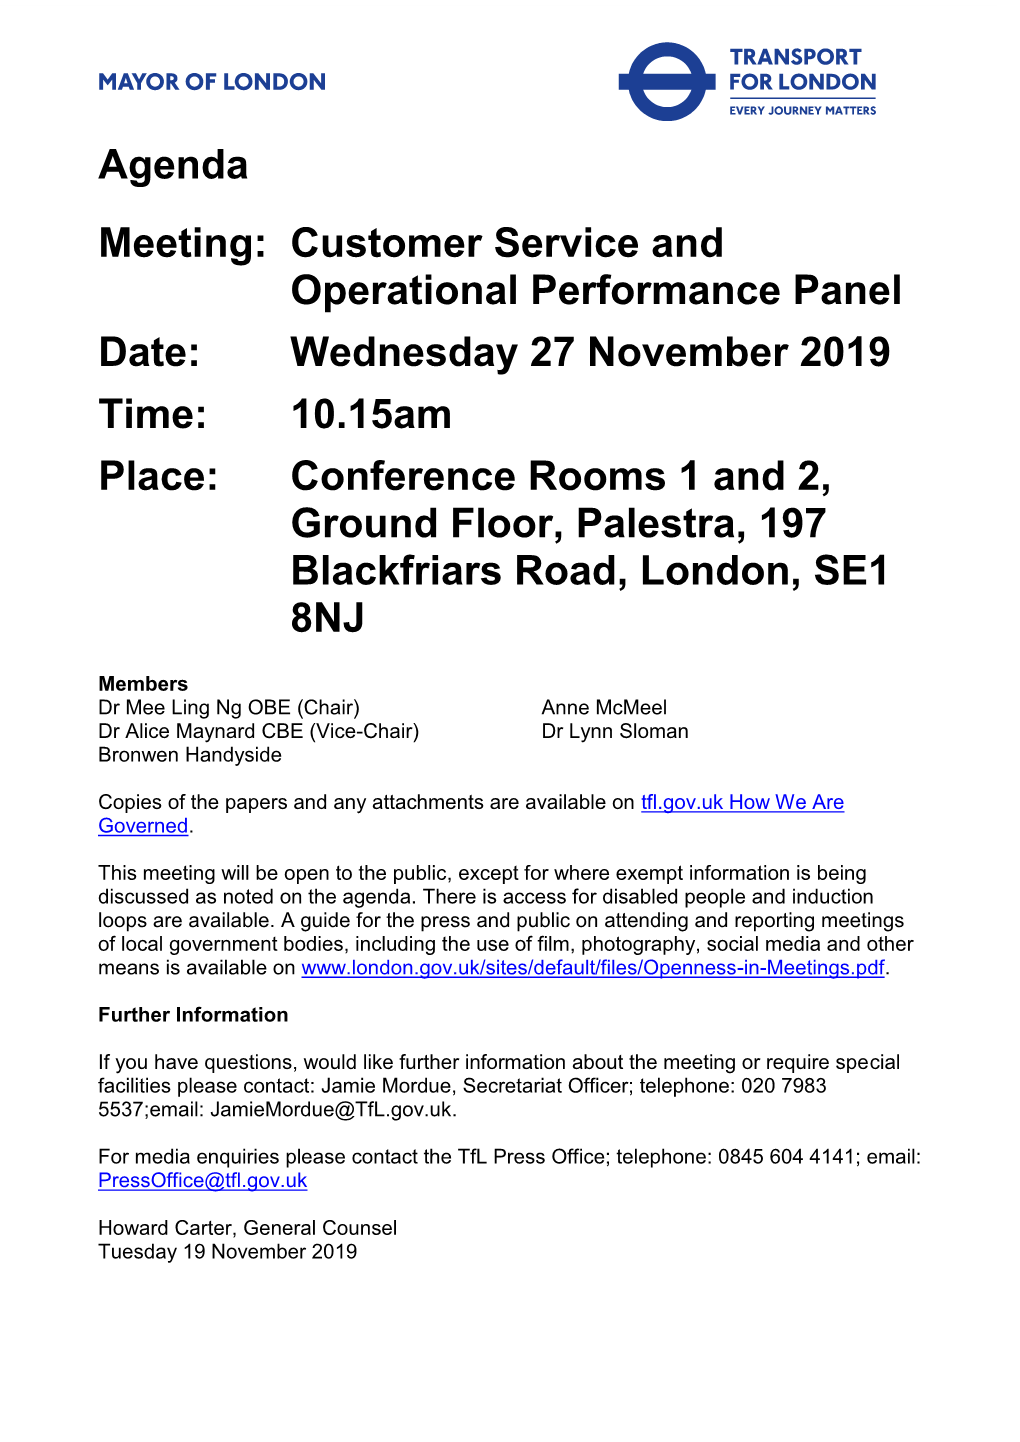 Customer Service and Operational Performance Panel 27 November